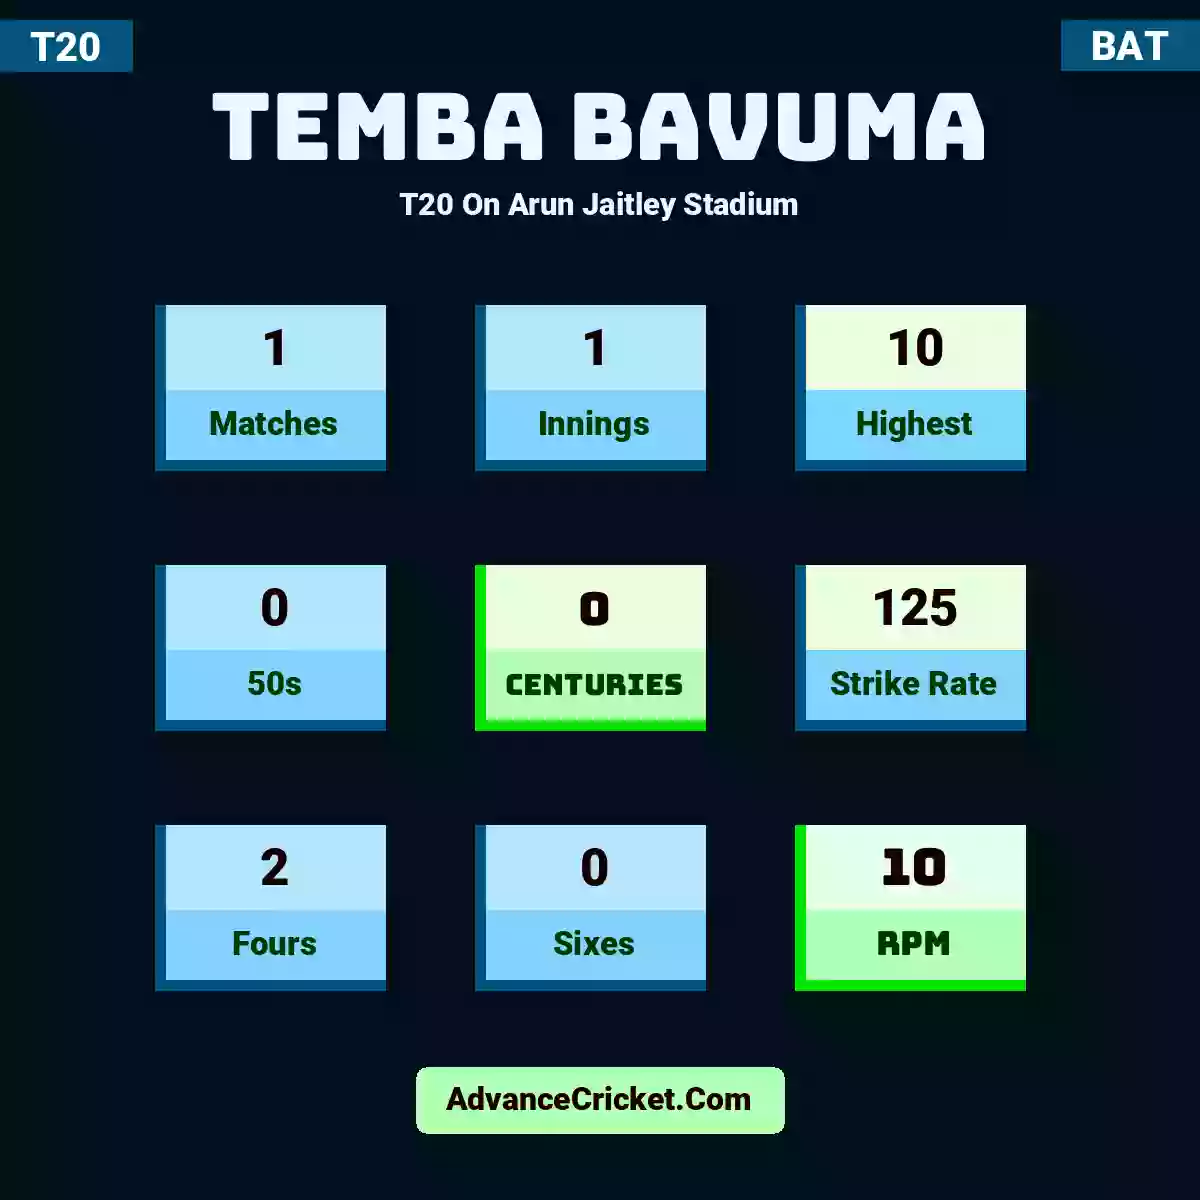 Temba Bavuma T20  On Arun Jaitley Stadium, Temba Bavuma played 1 matches, scored 10 runs as highest, 0 half-centuries, and 0 centuries, with a strike rate of 125. T.Bavuma hit 2 fours and 0 sixes, with an RPM of 10.